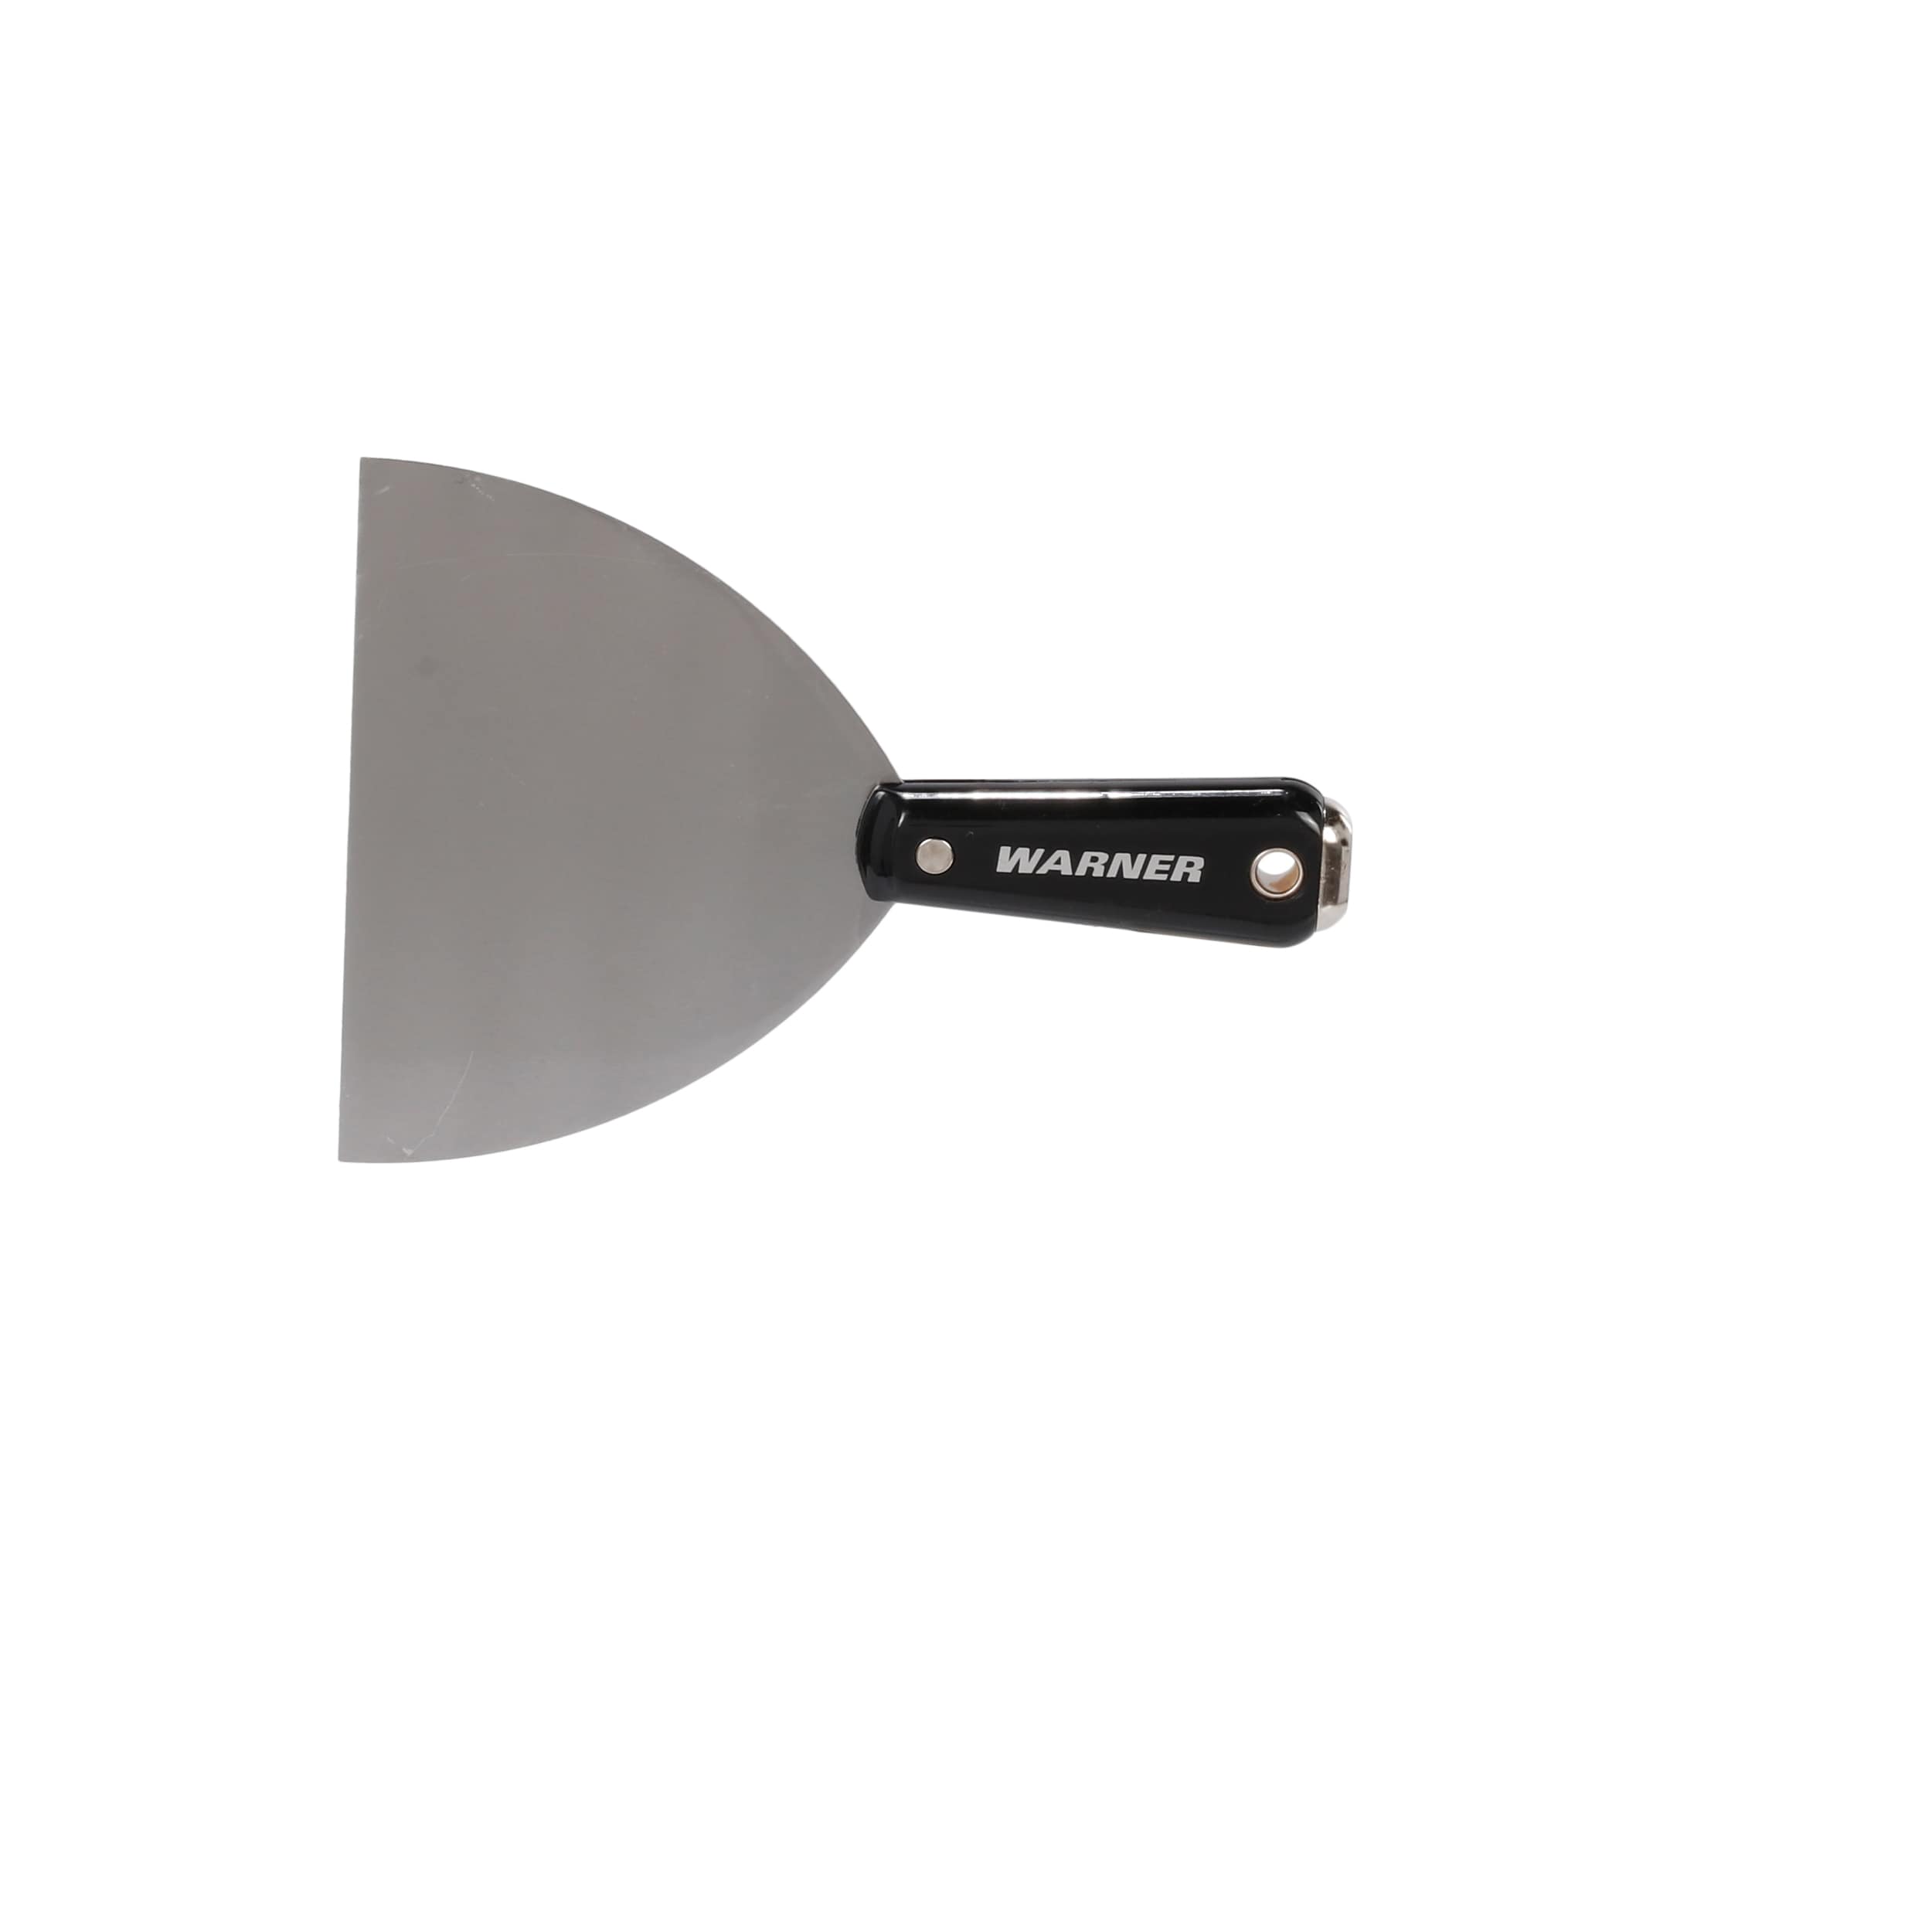 Clay modeling tools / double head knife 6 pcs Phoenix